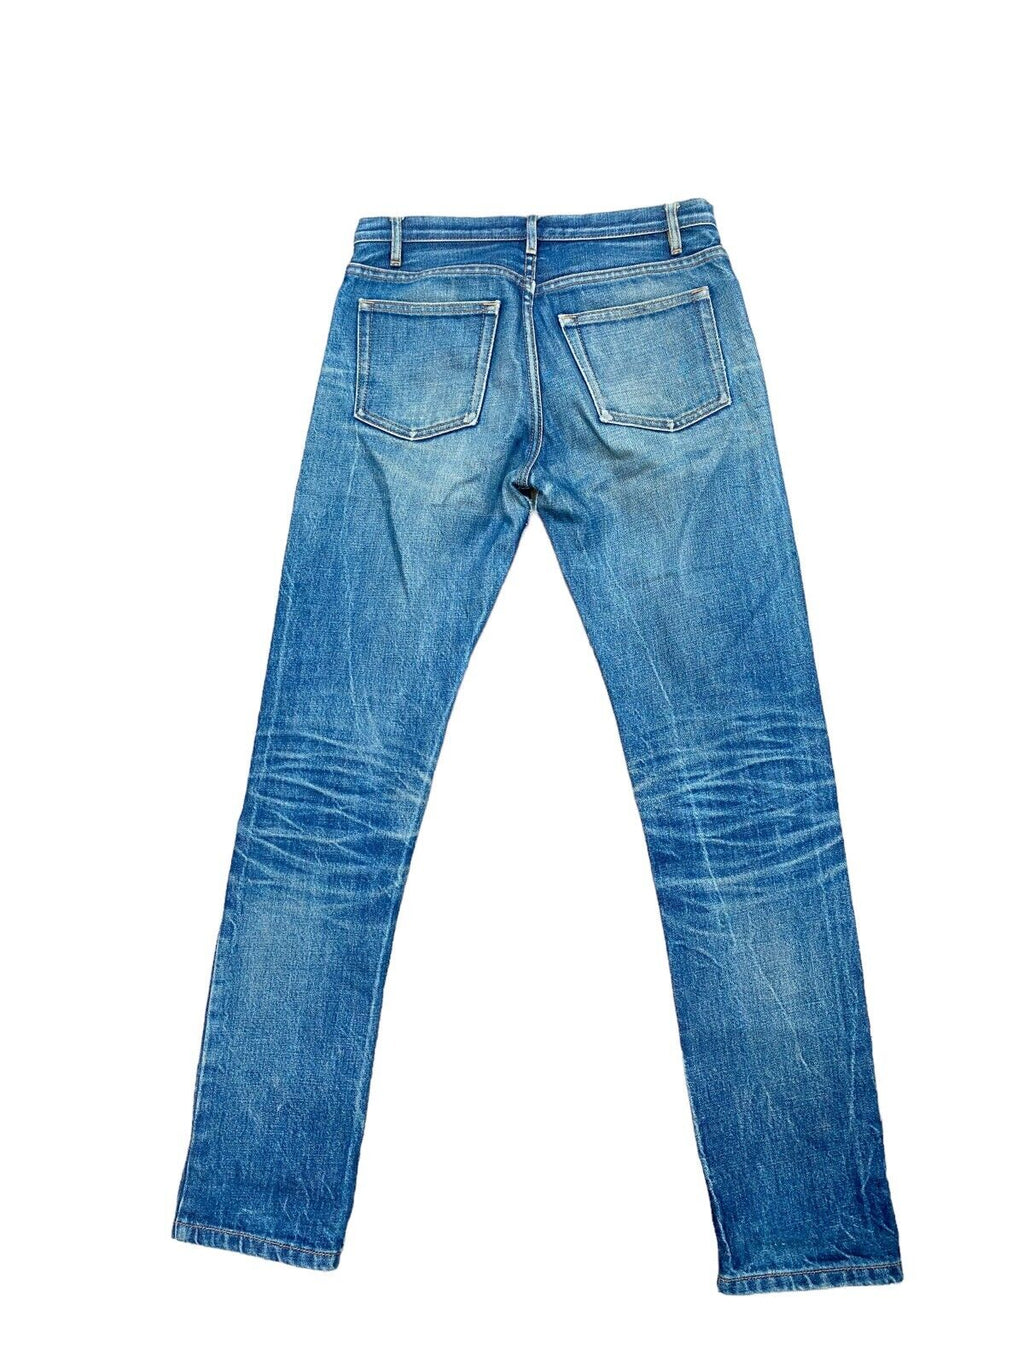 Denim jeans   New Cure F Women  Size 25  Low rise  APC